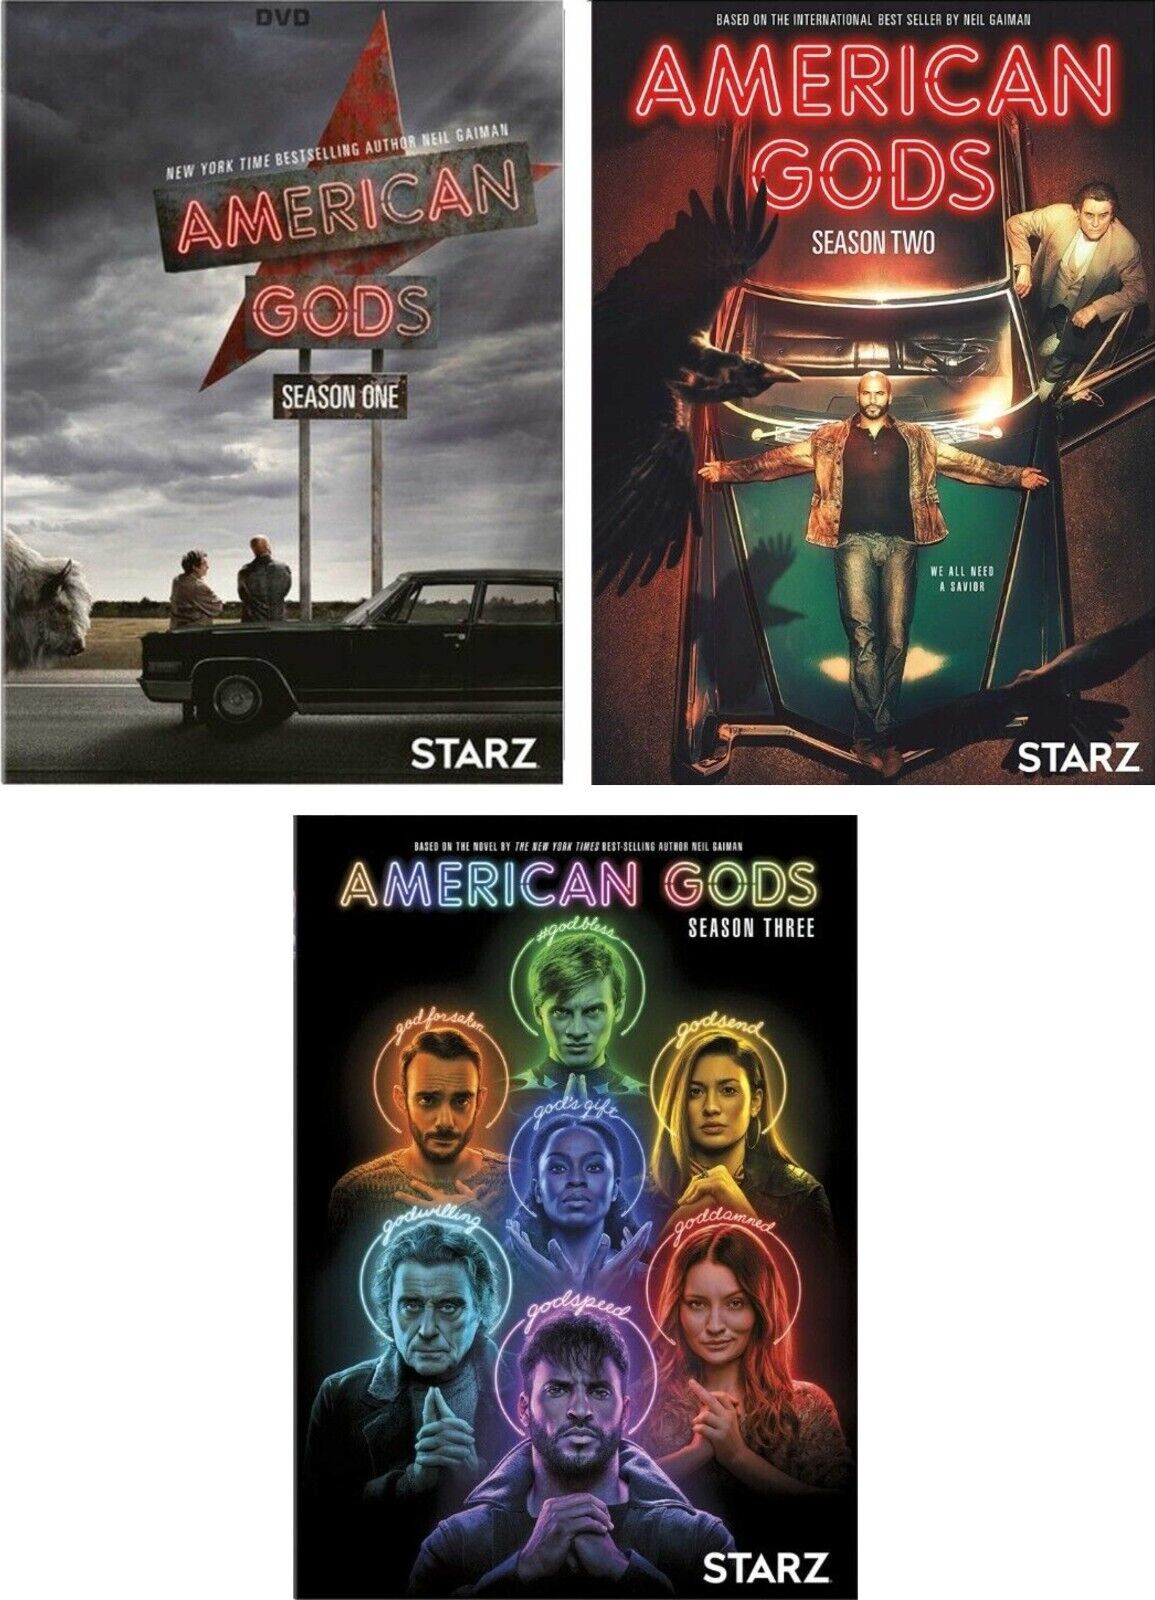 AMERICAN GODS Series the Complete Seasons 1-3 (DVD - 9 Disc Set) - Season 1 2 3